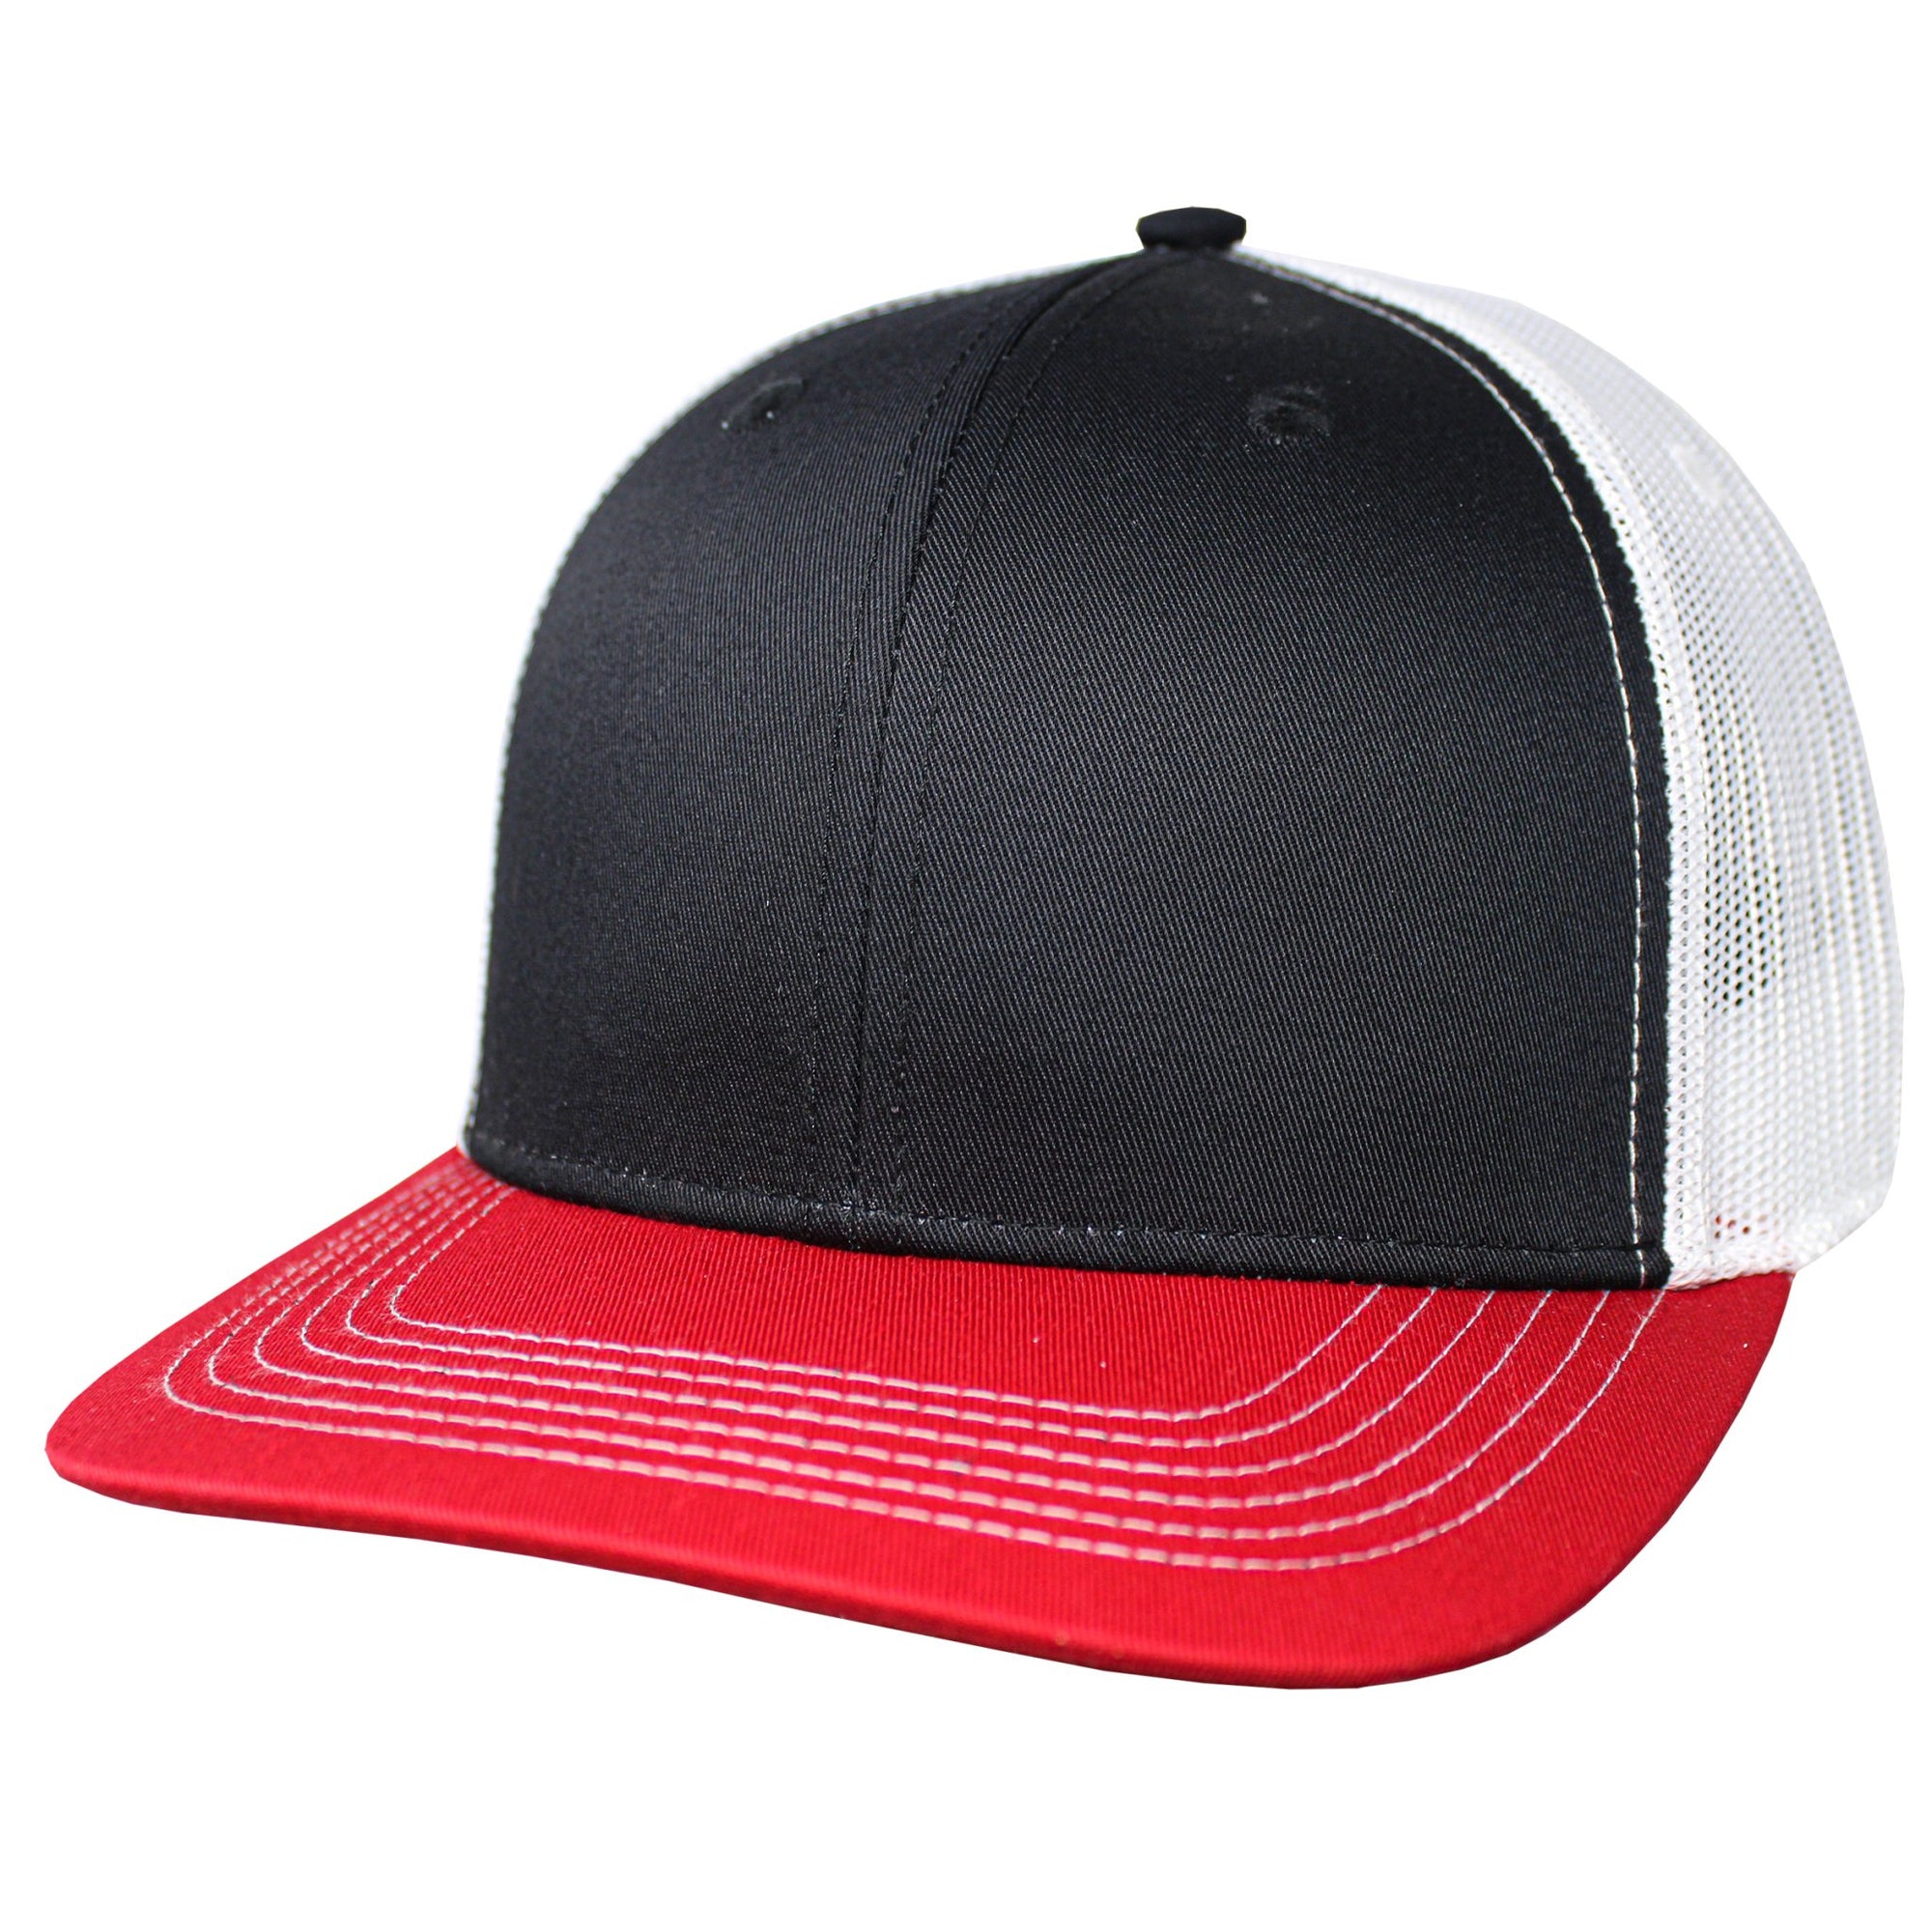 Blank Headwear - BC23 / 6 Panel Performance Trucker Cap - Black/White/Red - Black Cat MFG - Hat